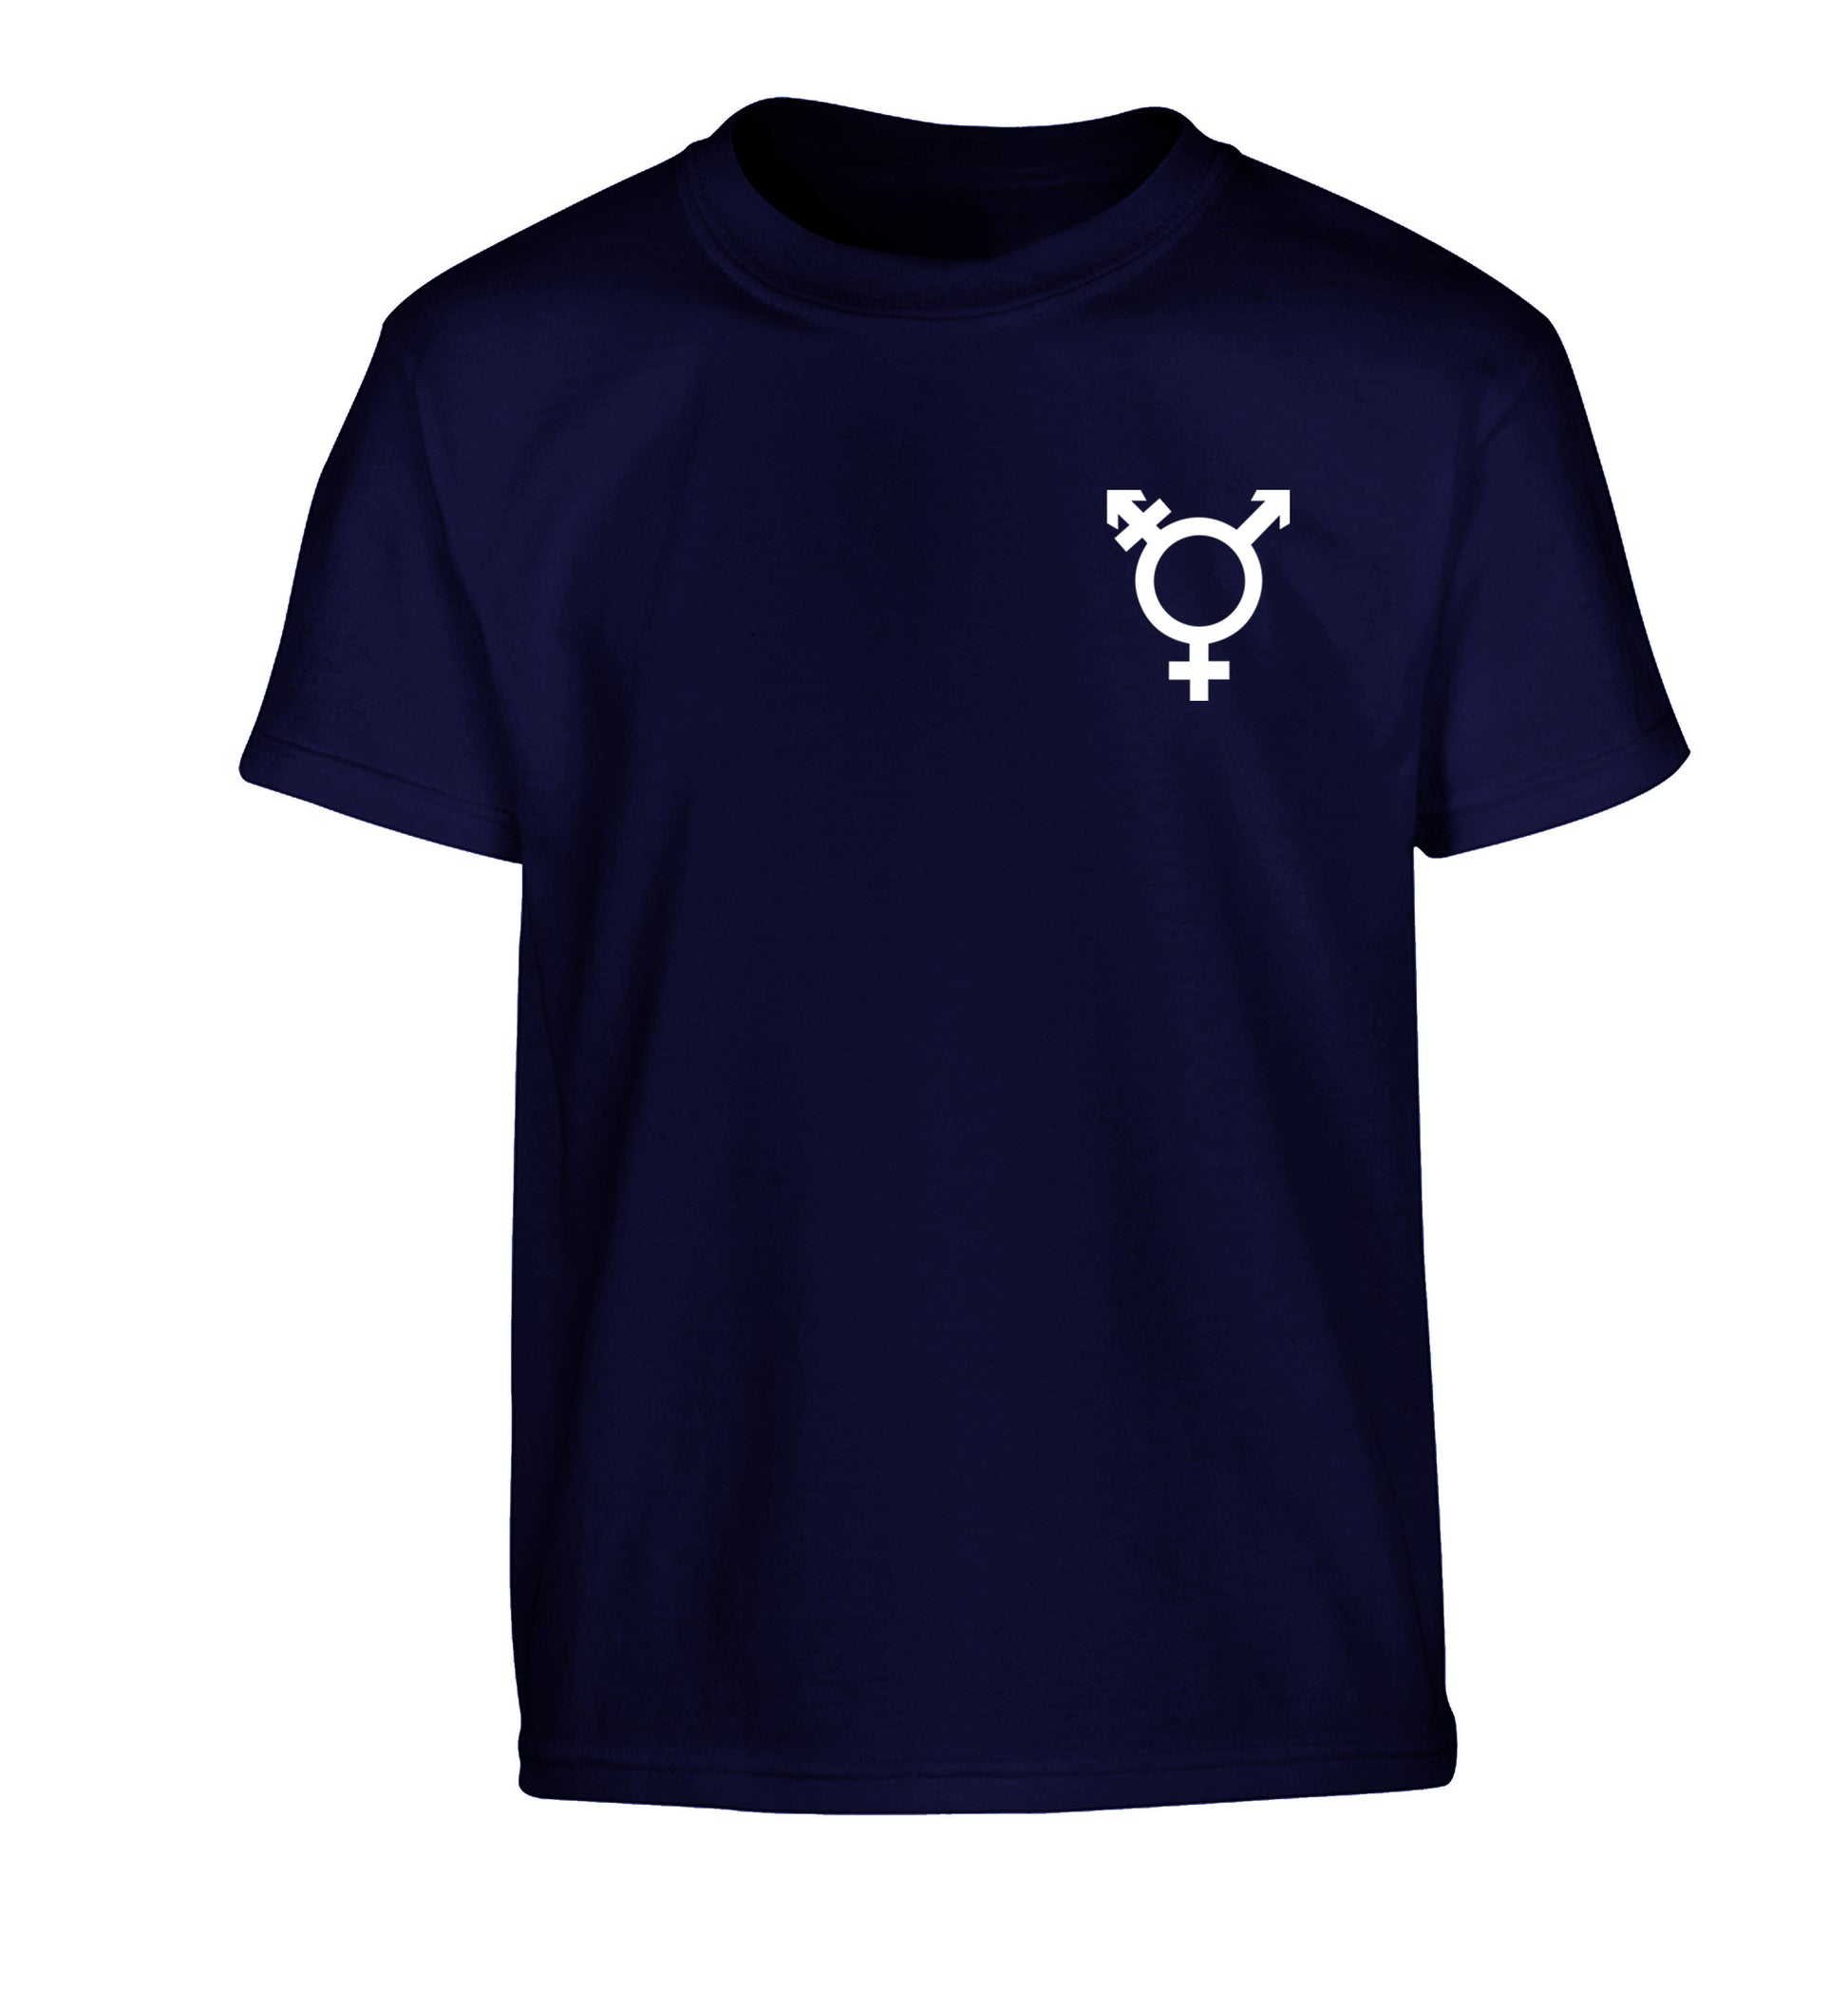 Trans gender symbol pocket Children's navy Tshirt 12-14 Years